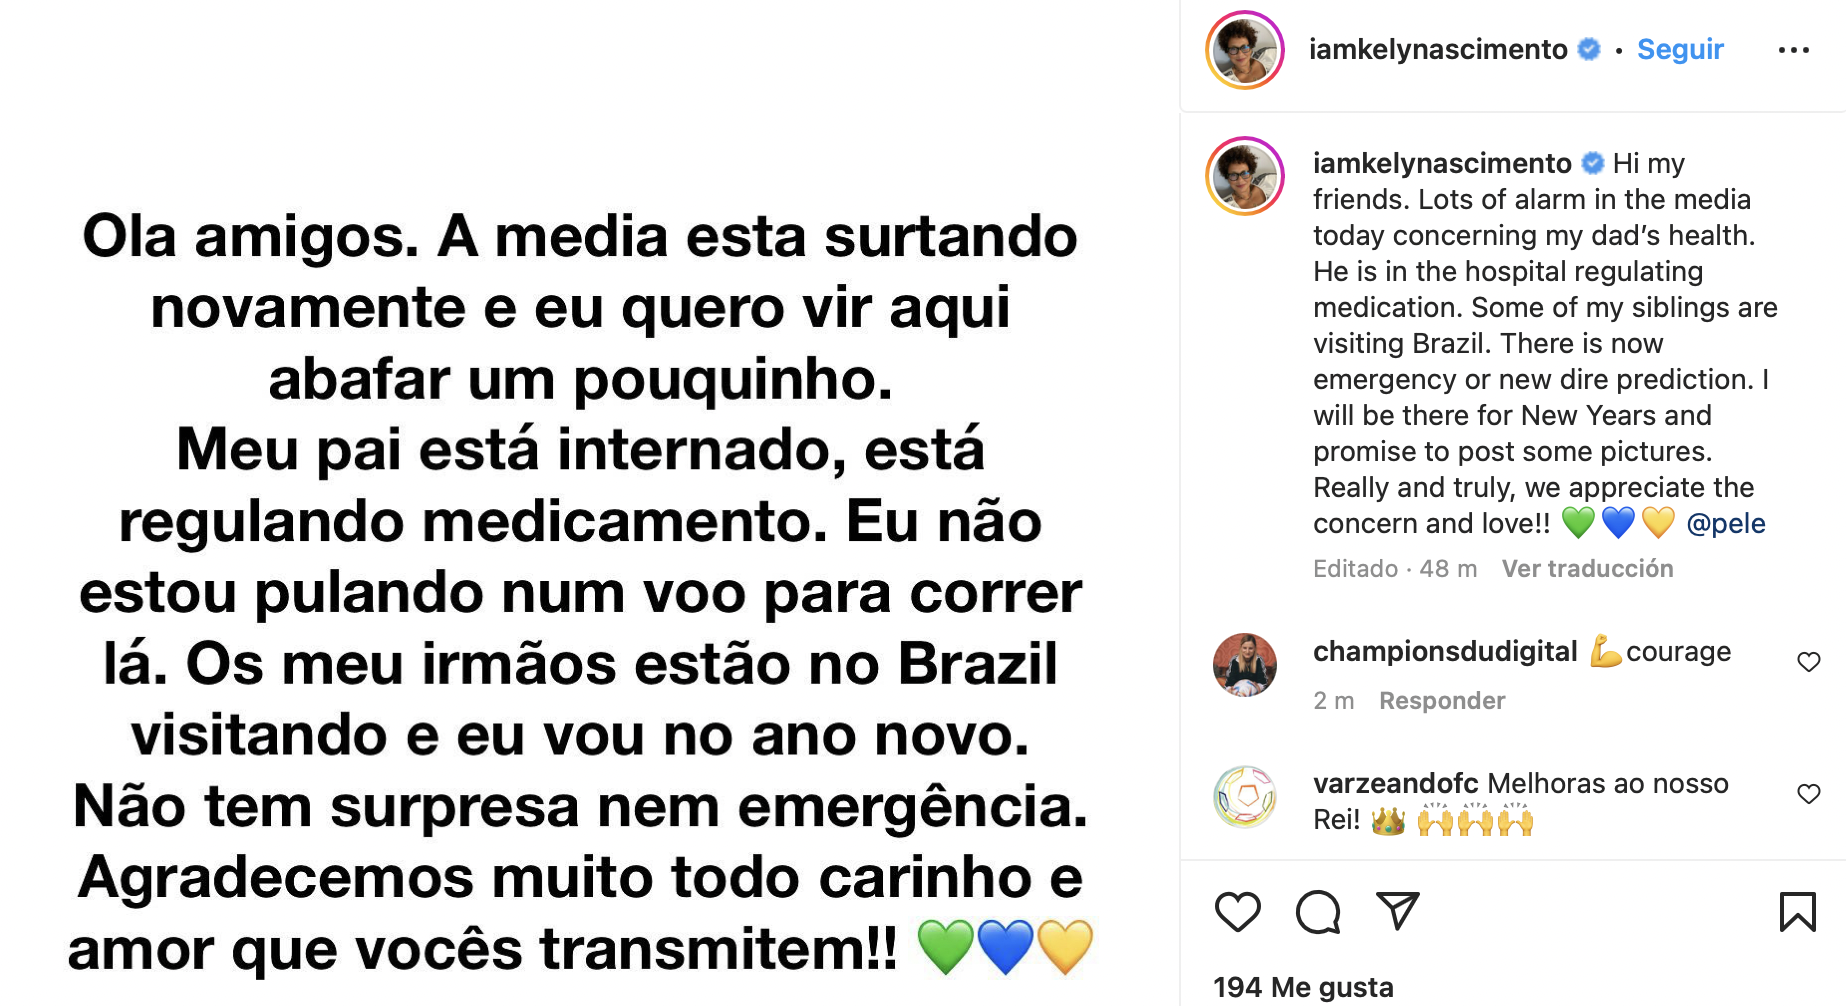 hospitalized-hospital-pele-fights-cancer-again-emergency-brazil-2